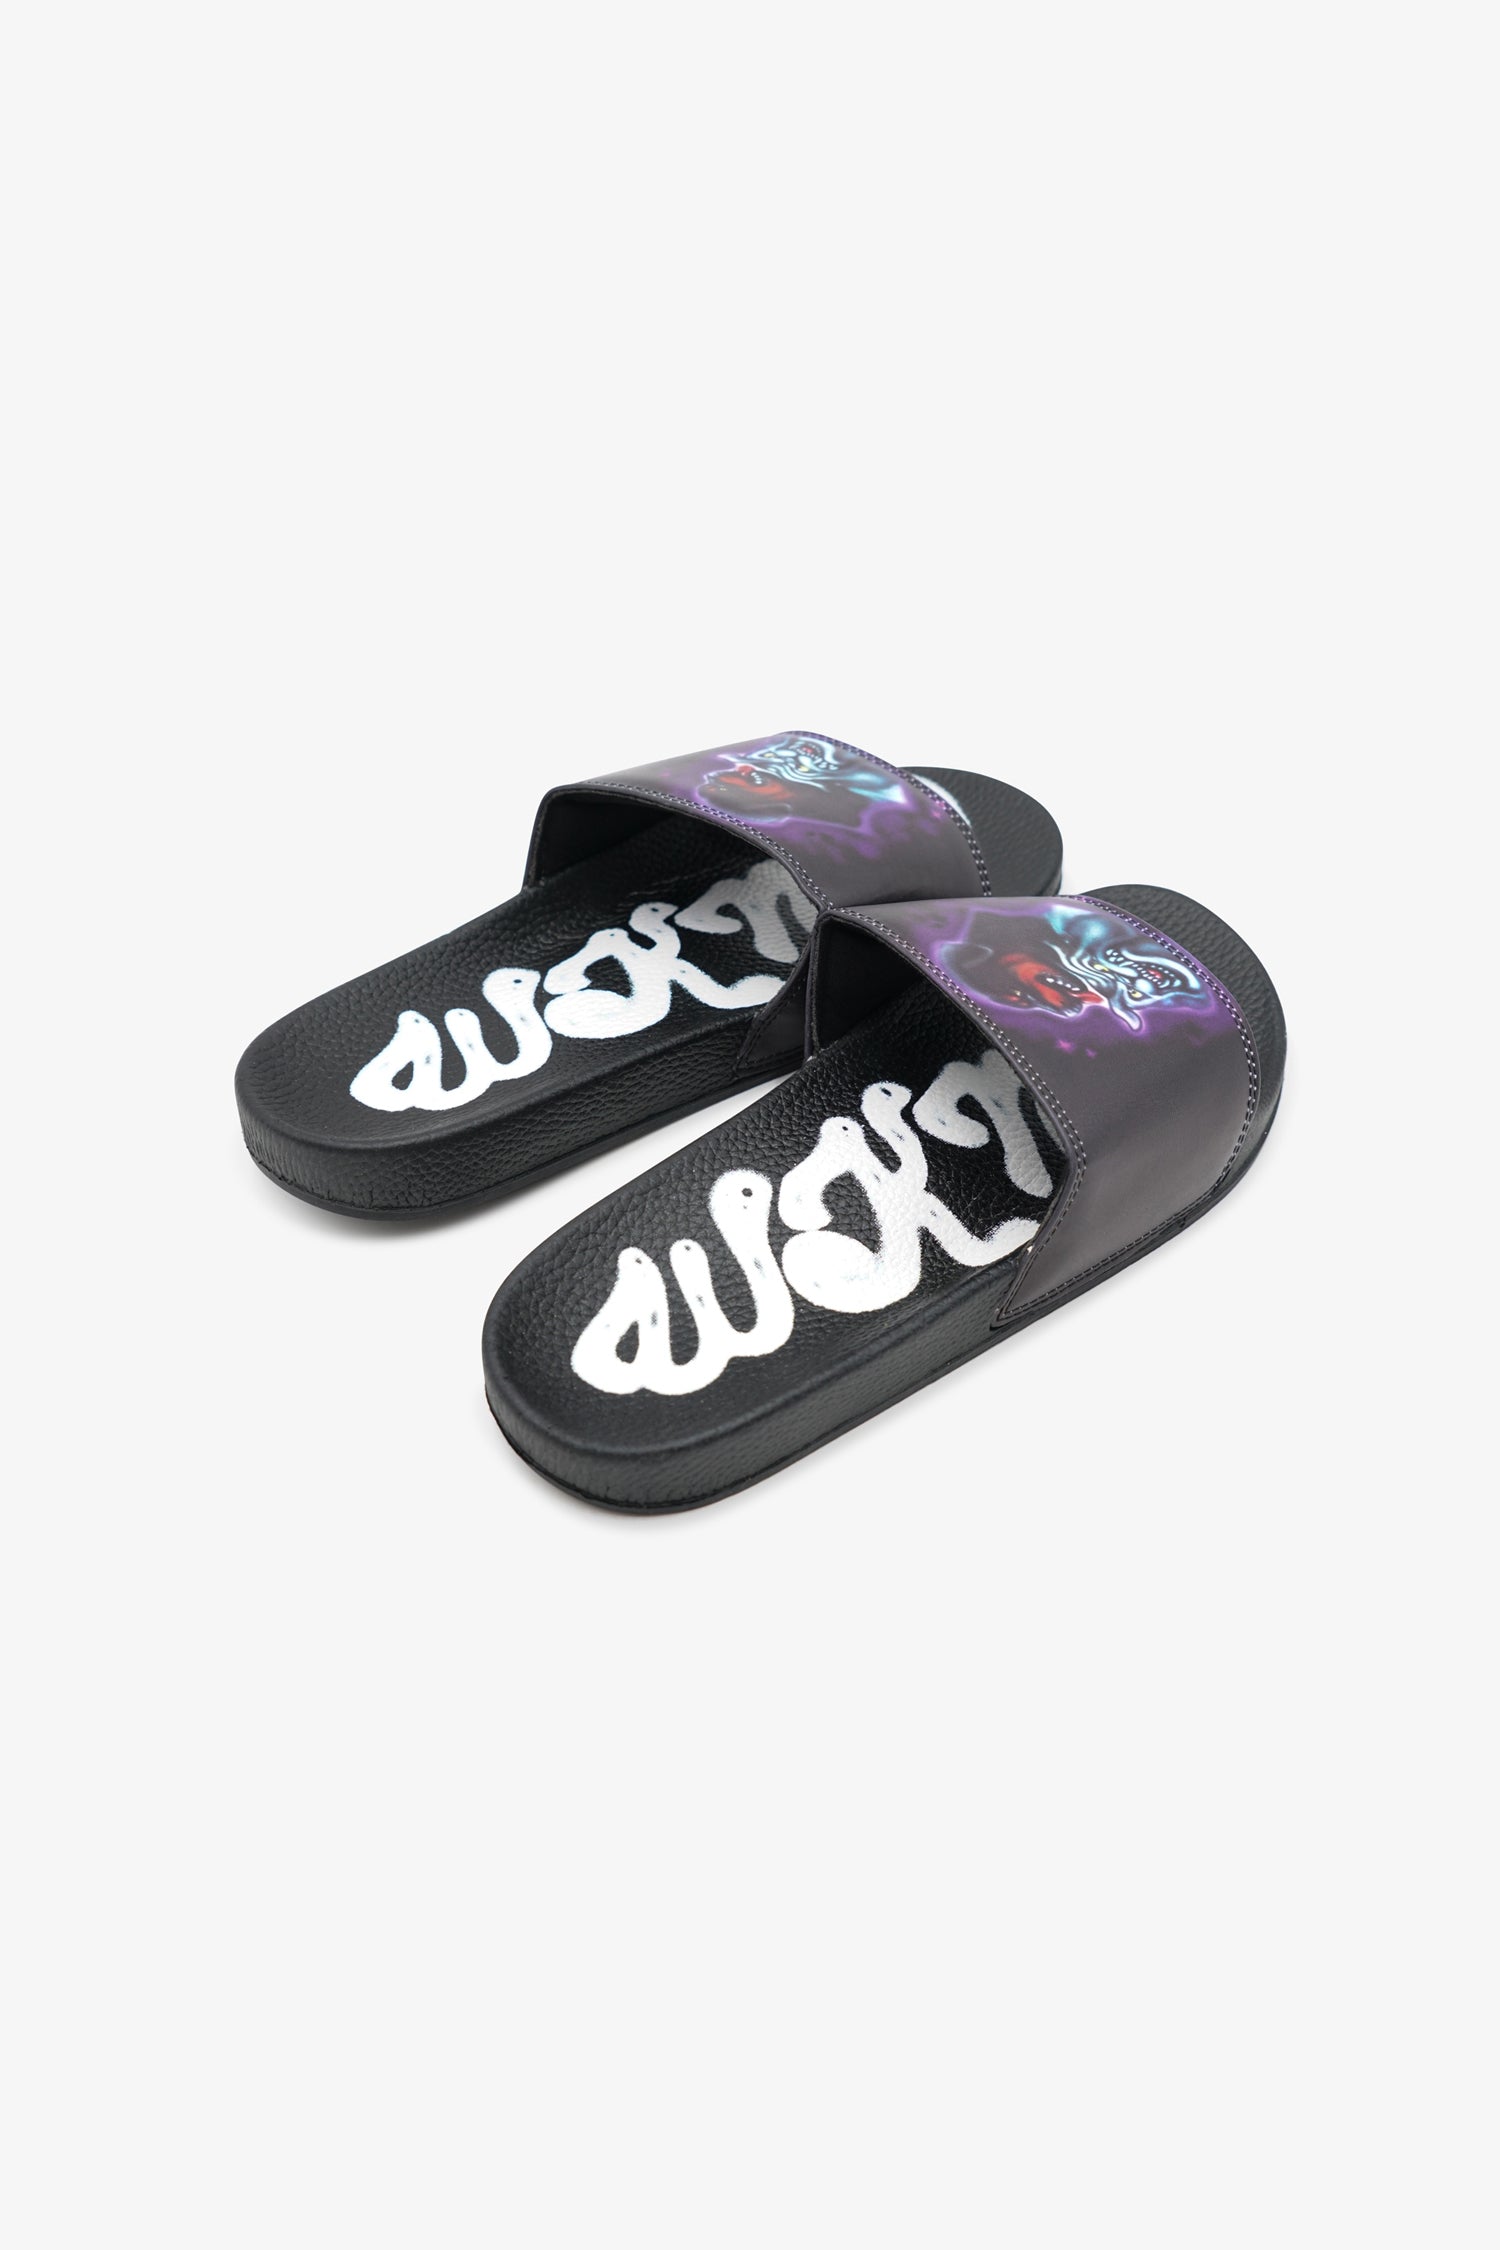 Selectshop FRAME - WKND Pupps Slides Footwear Dubai